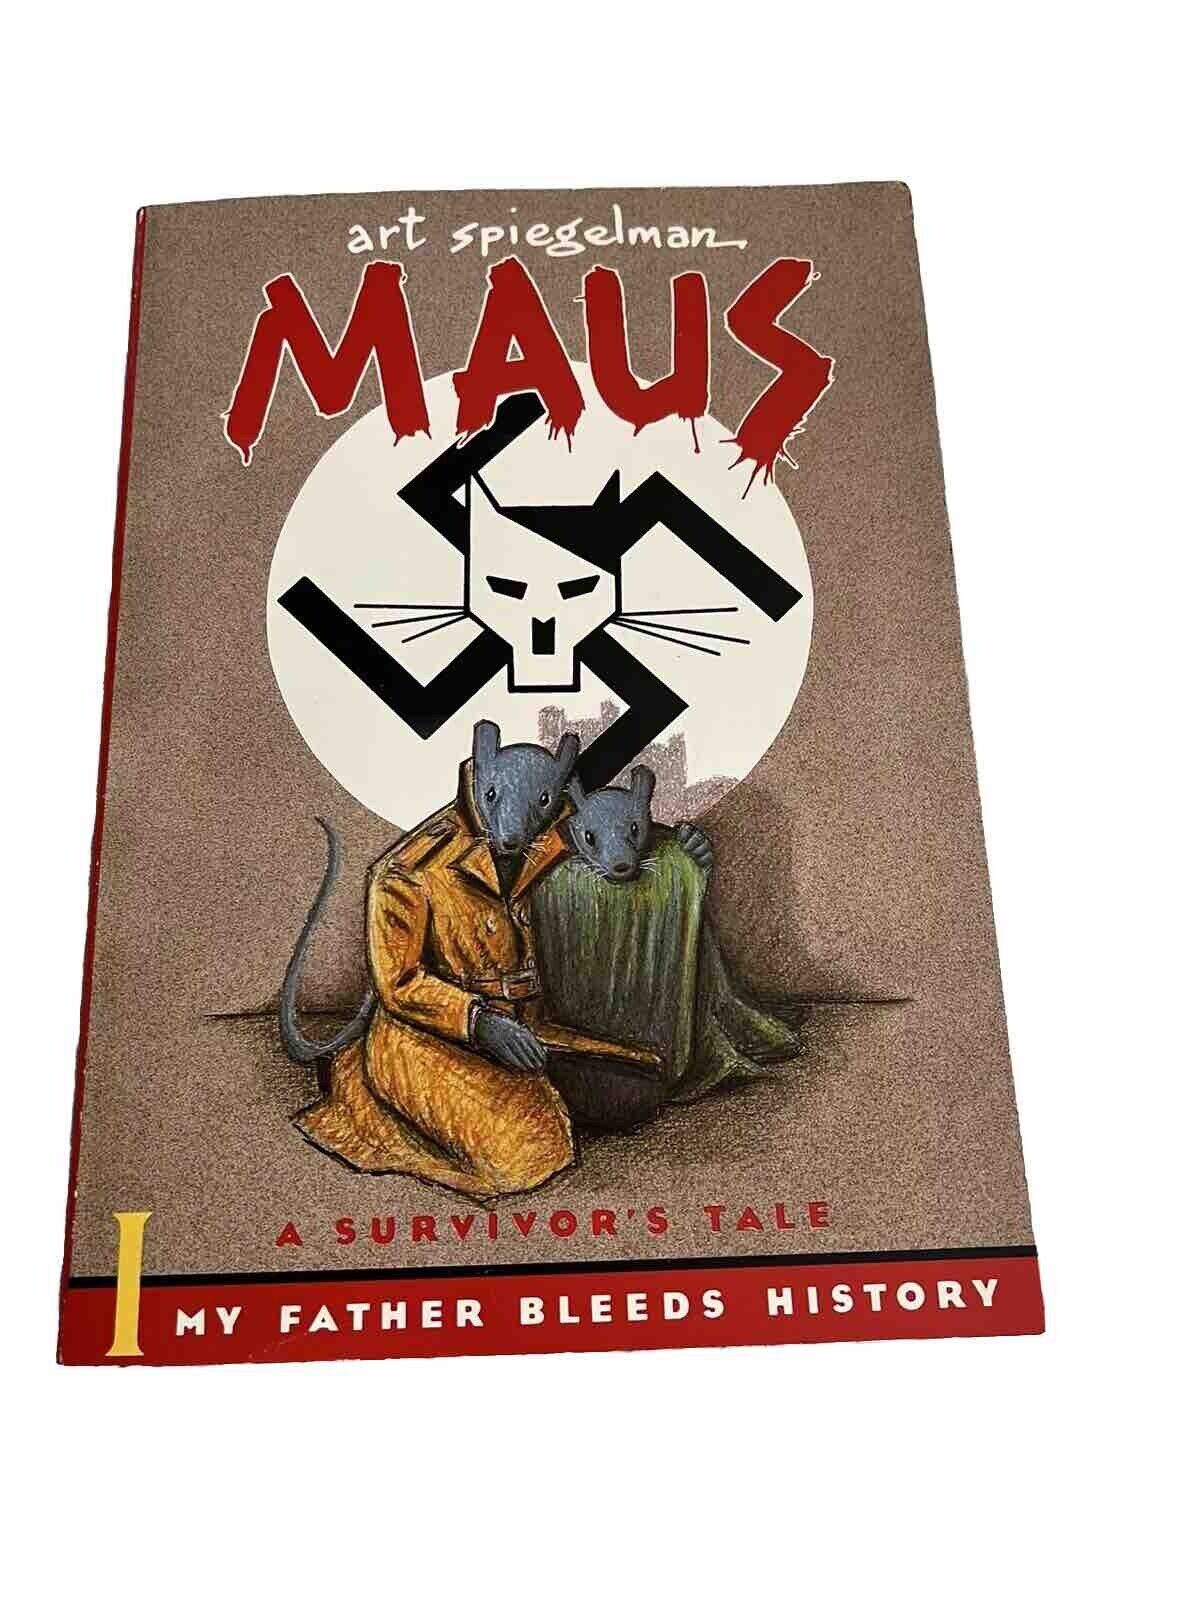 Maus I: A Survivor's Tale: My Father Bleeds History by Art Spiegelman 1986